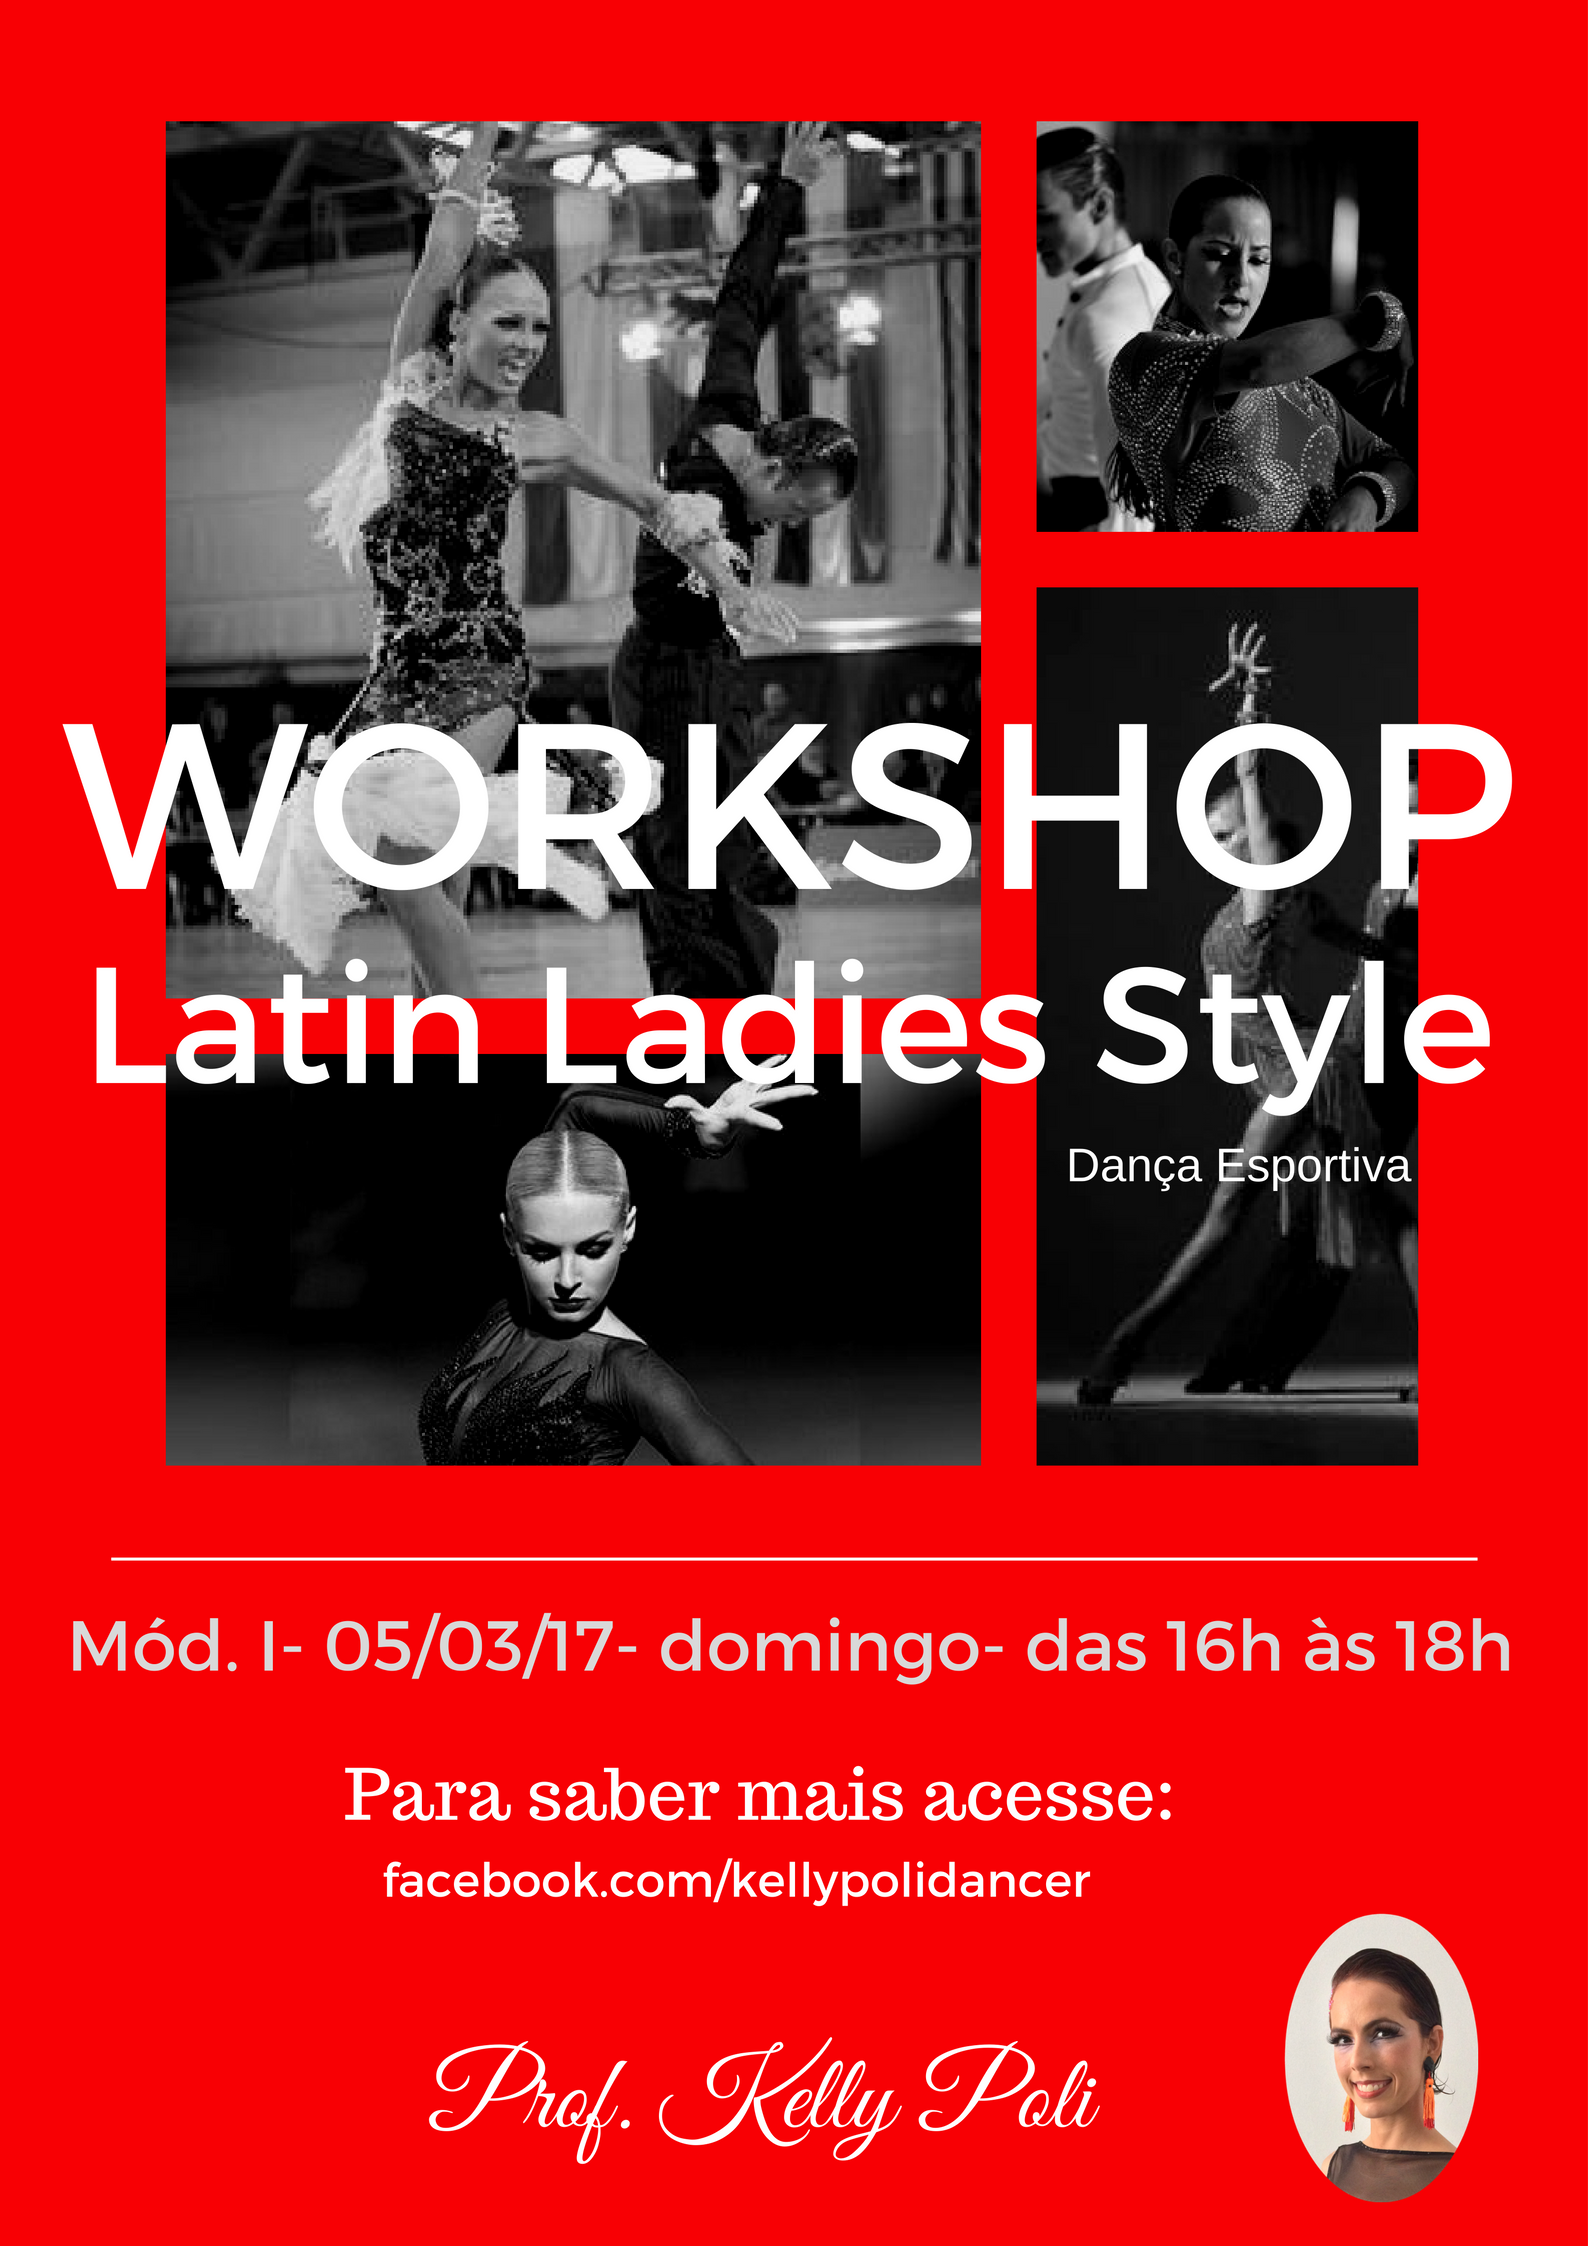 Workshop Latin Ladies Style- Prof. Kelly Poli